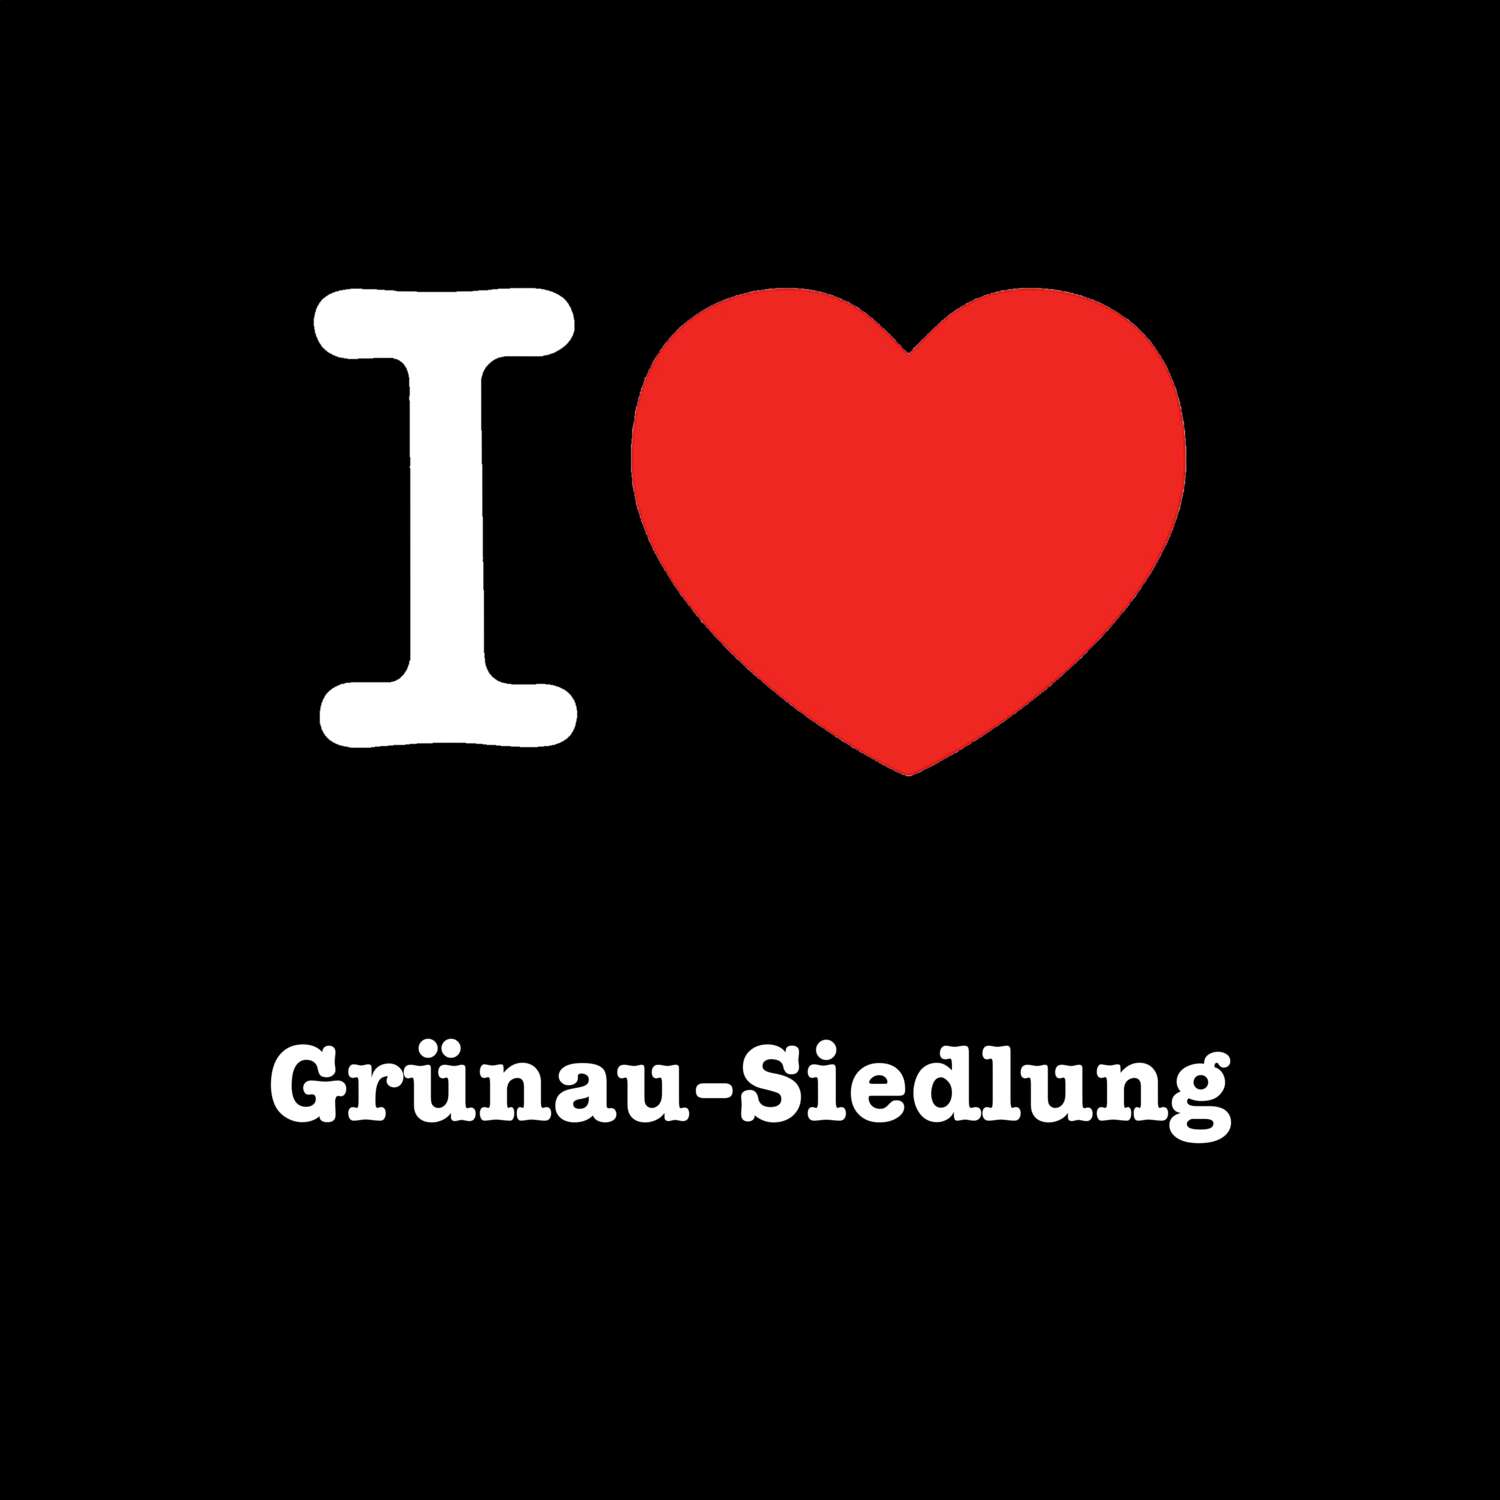 Grünau-Siedlung T-Shirt »I love«